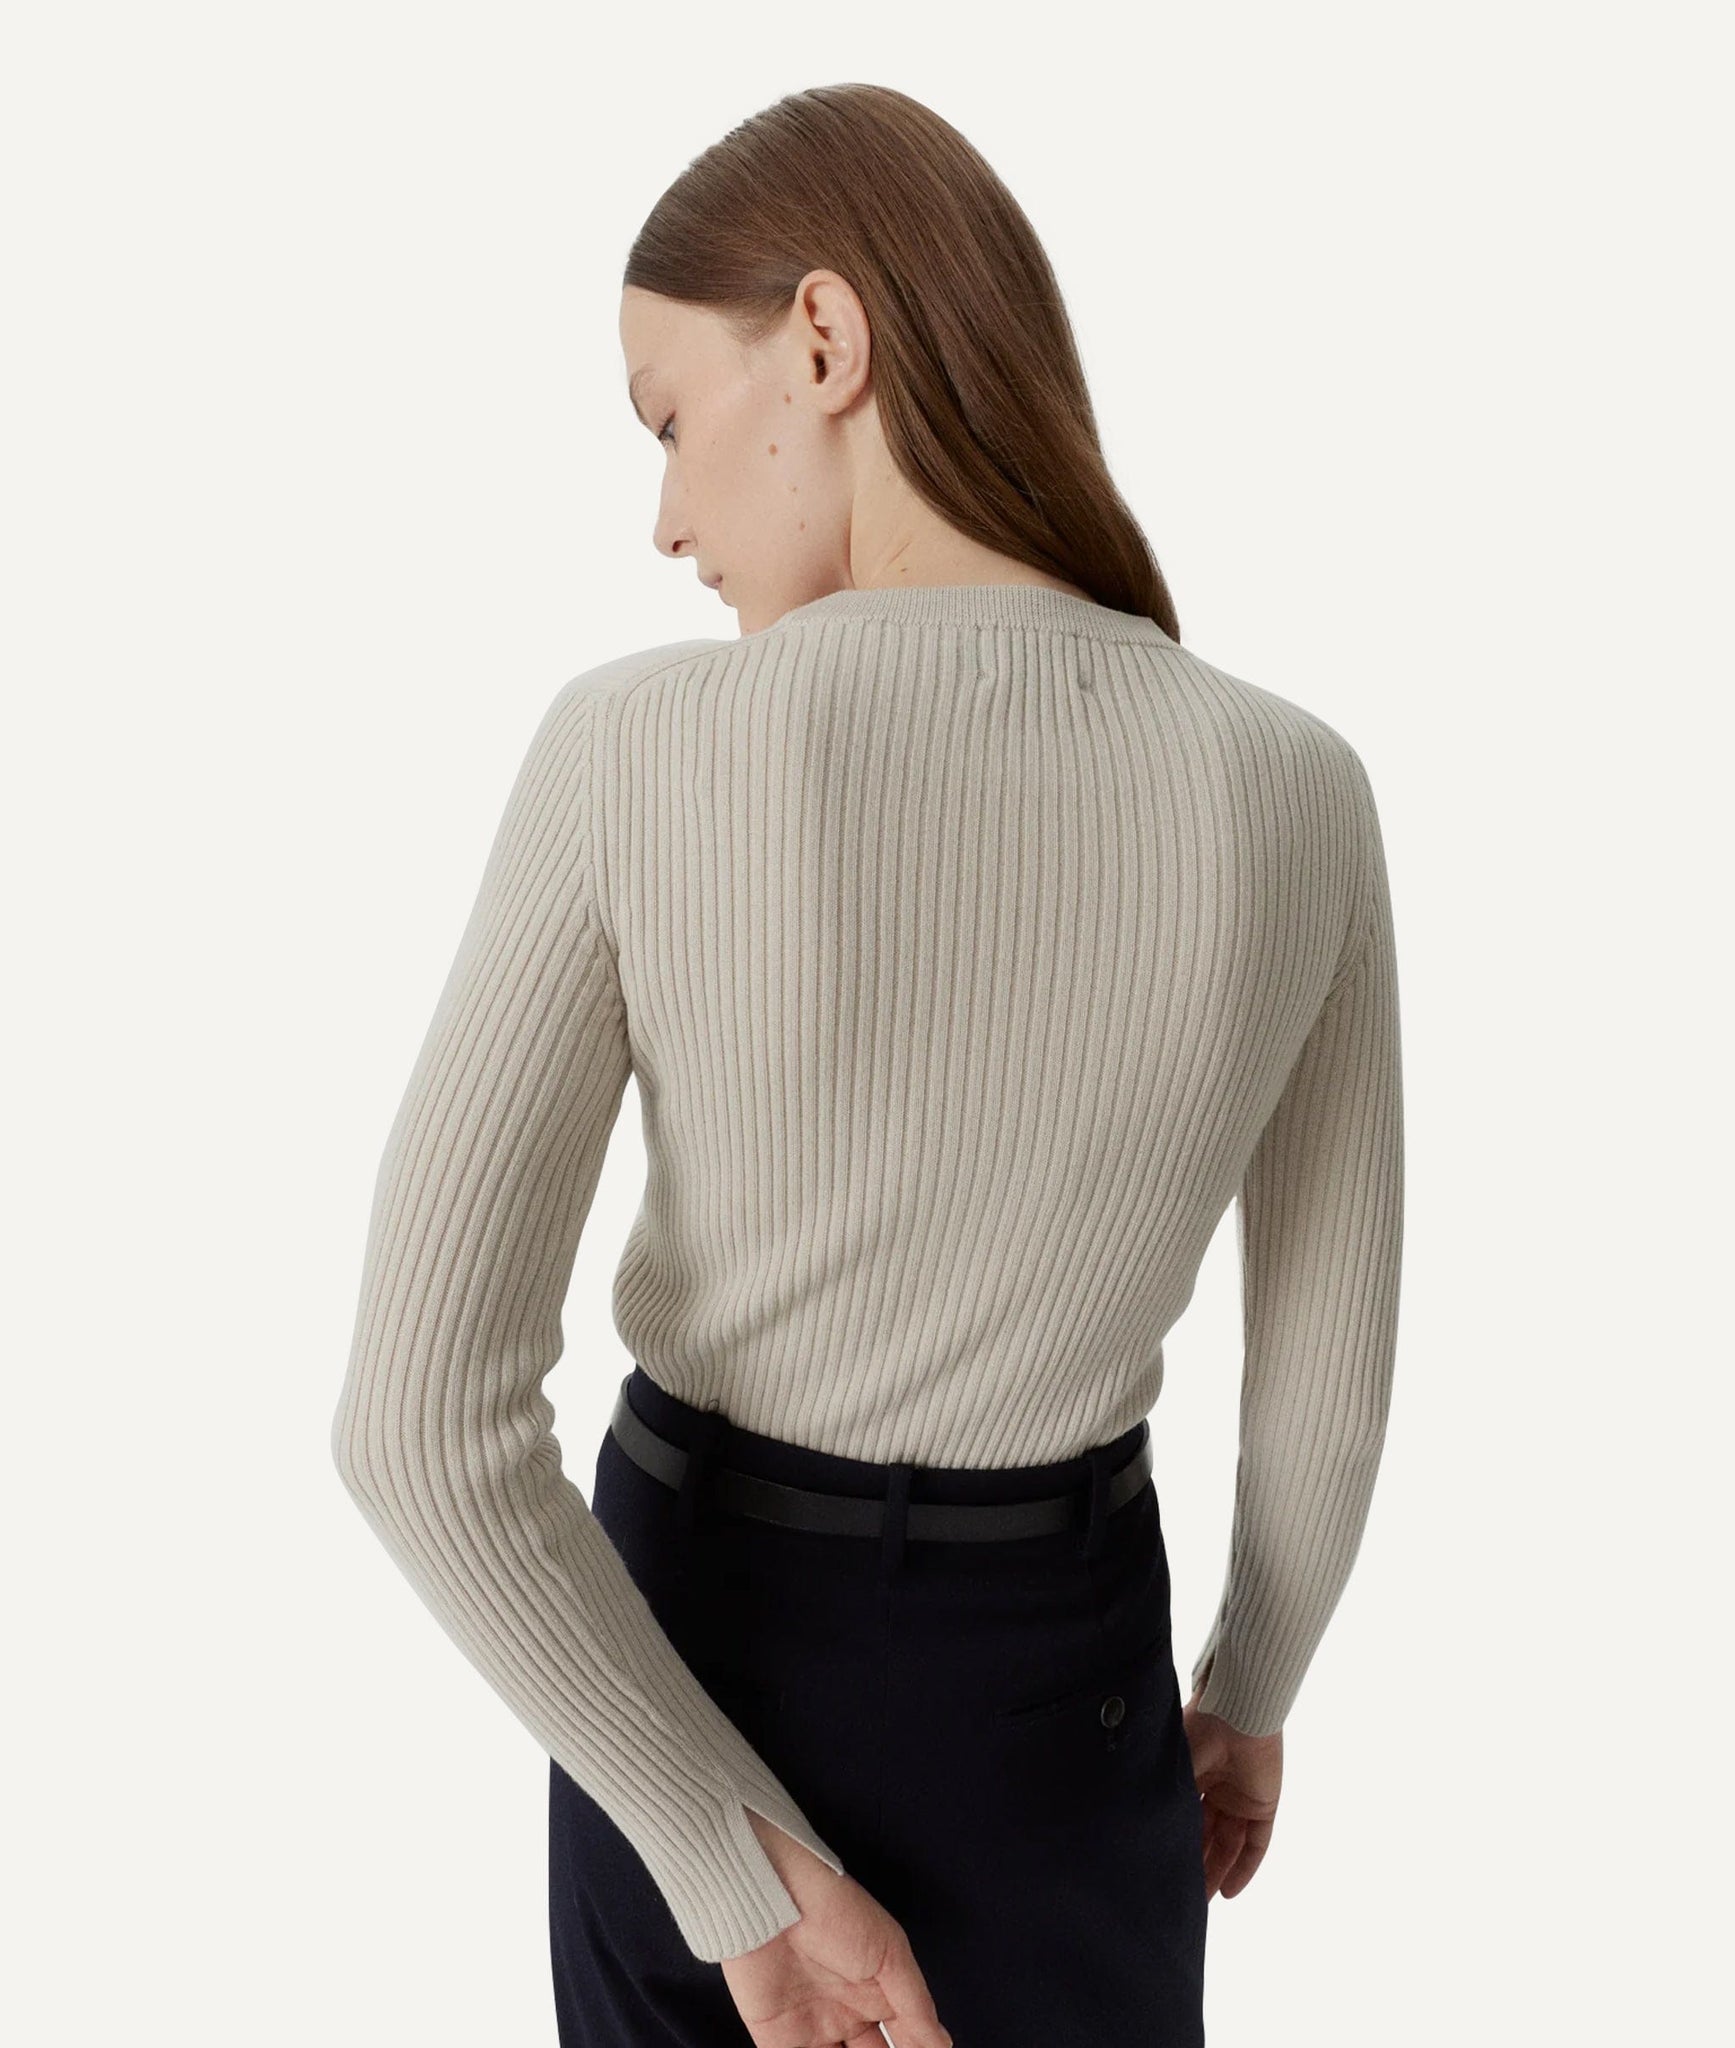 The Merino Wool Ribbed Sweater